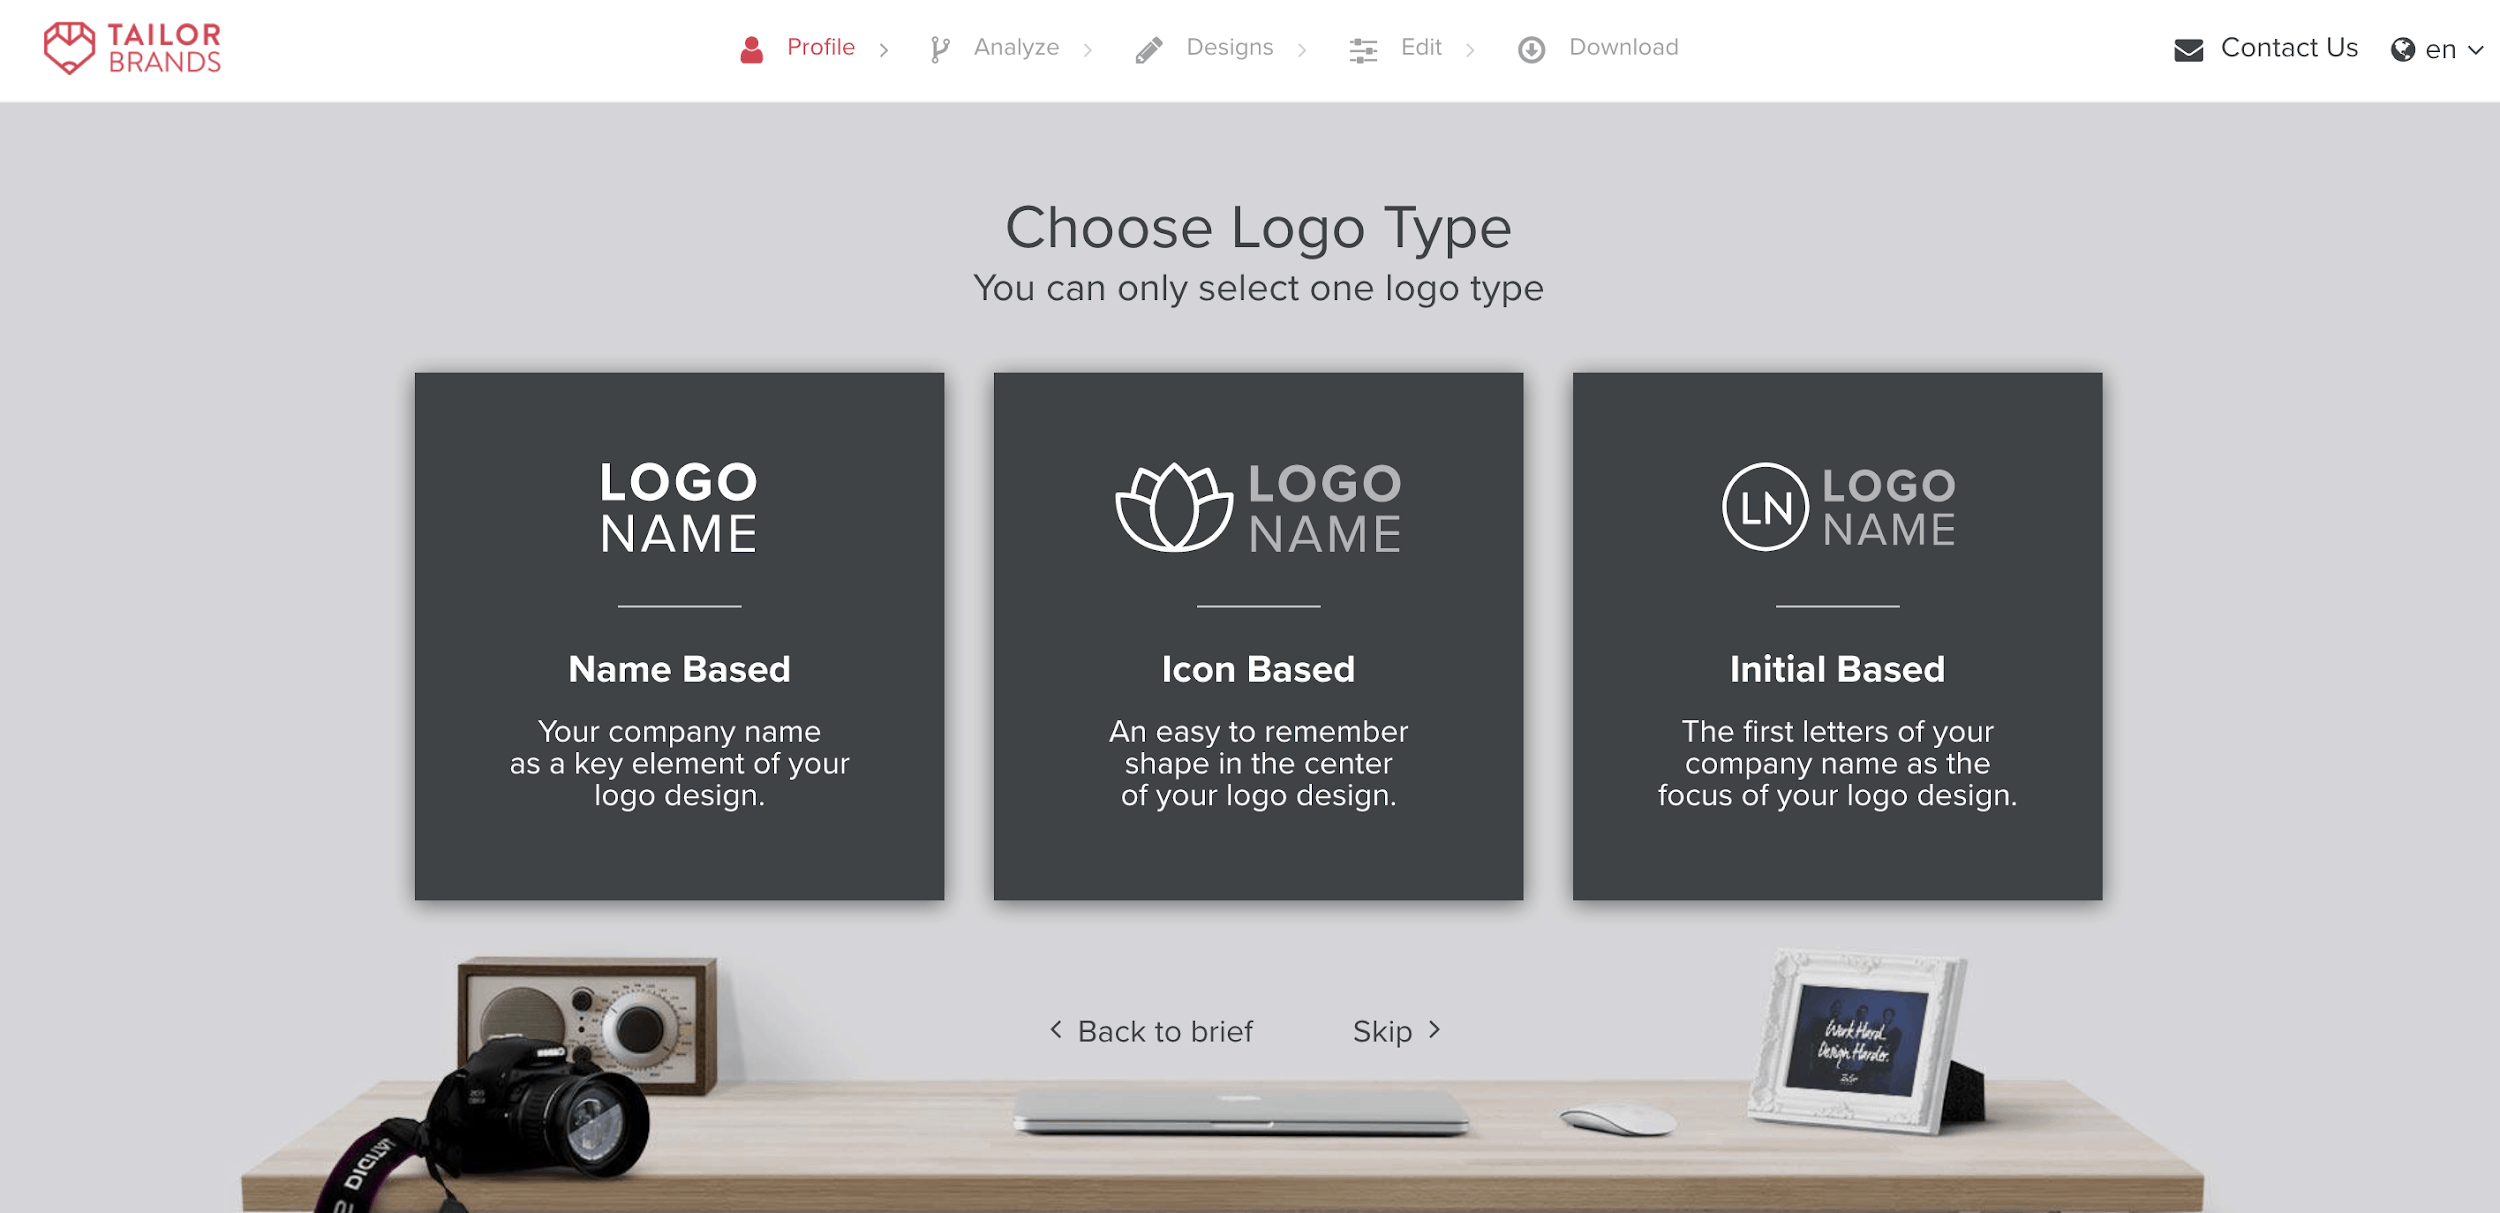 Tailor Brands screenshot - Choose Logo Type